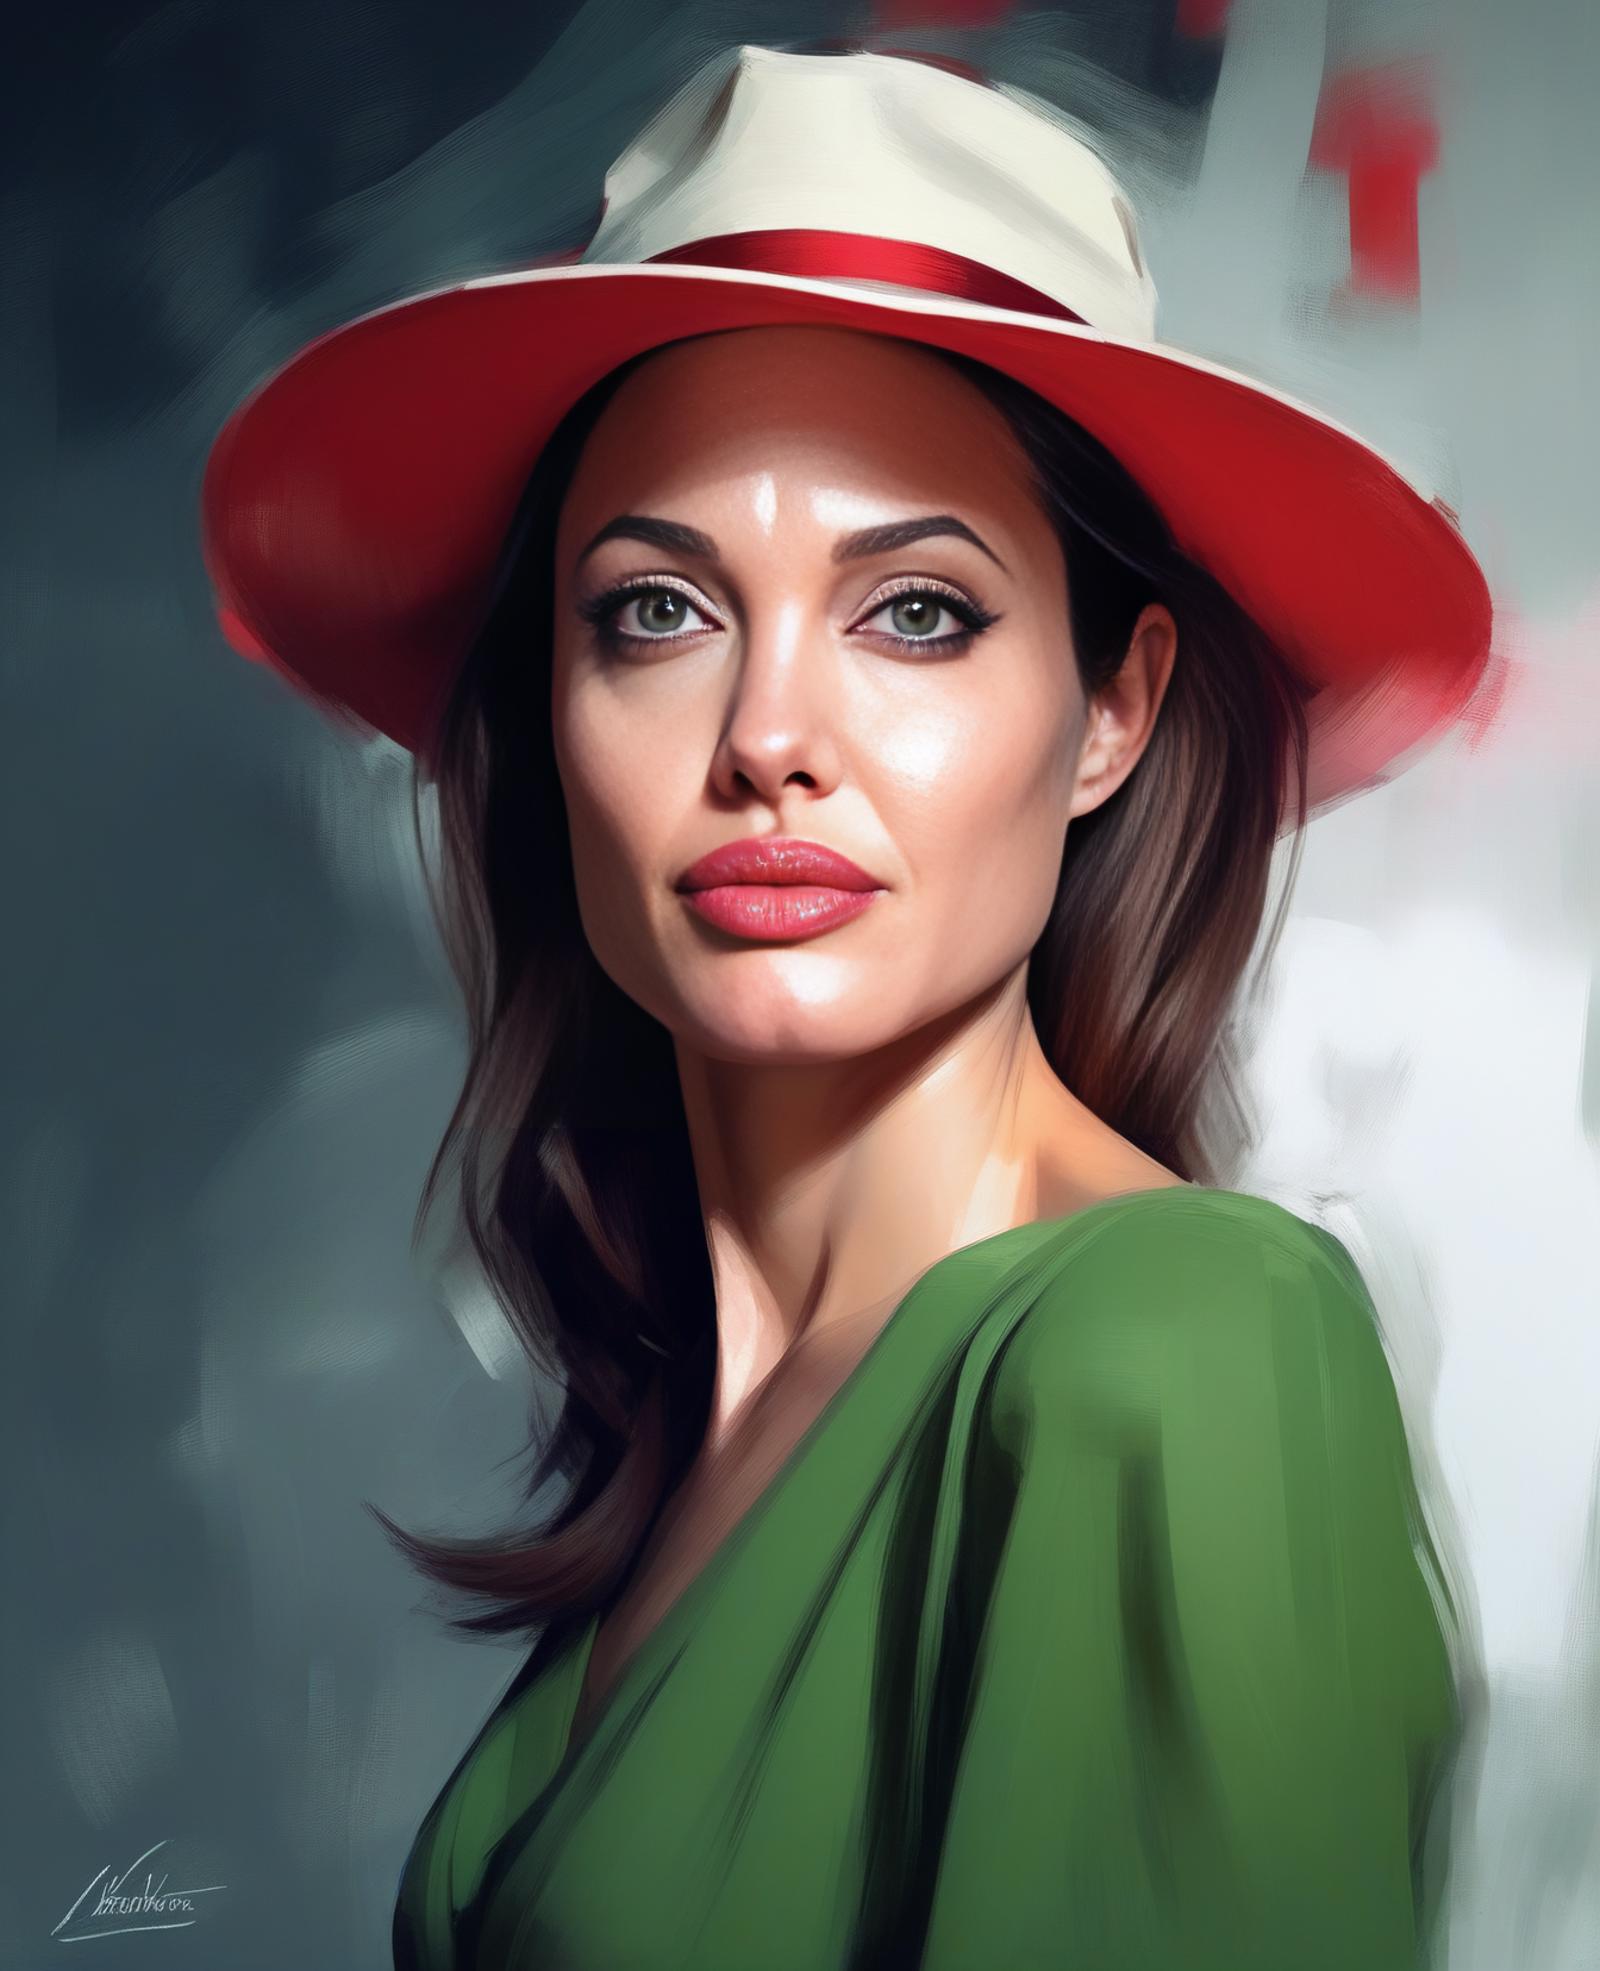 Angelina Jolie image by parar20